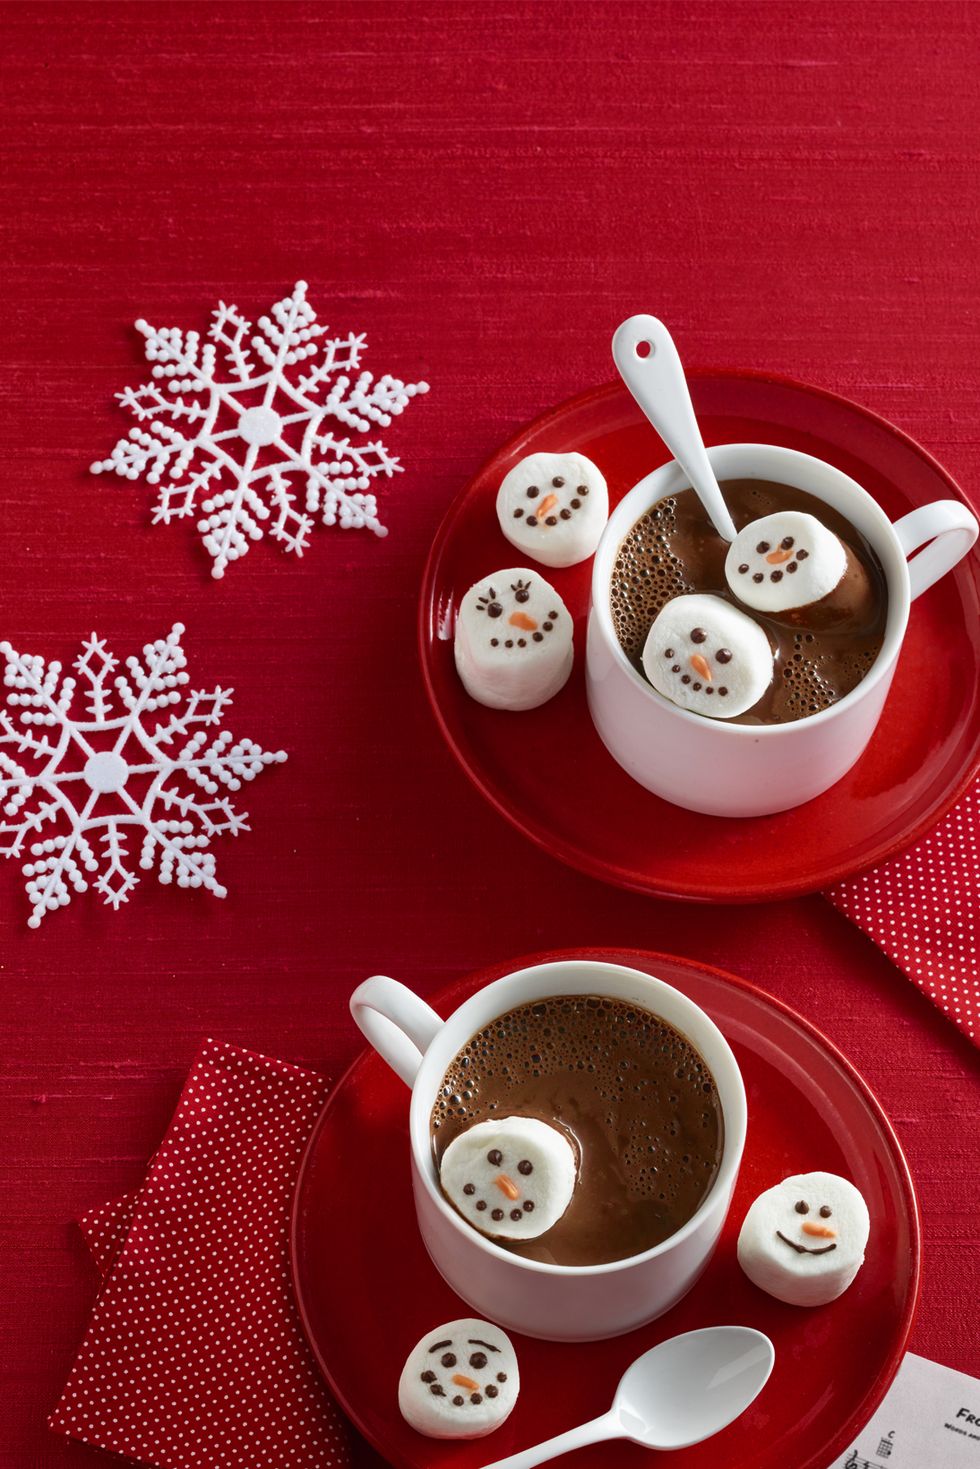 https://hips.hearstapps.com/wdy.h-cdn.co/assets/16/45/1478562234-christmas-desserts-snowman-marshmallows-1216.jpg?crop=0.810xw:0.810xh;0.111xw,0.110xh&resize=980:*